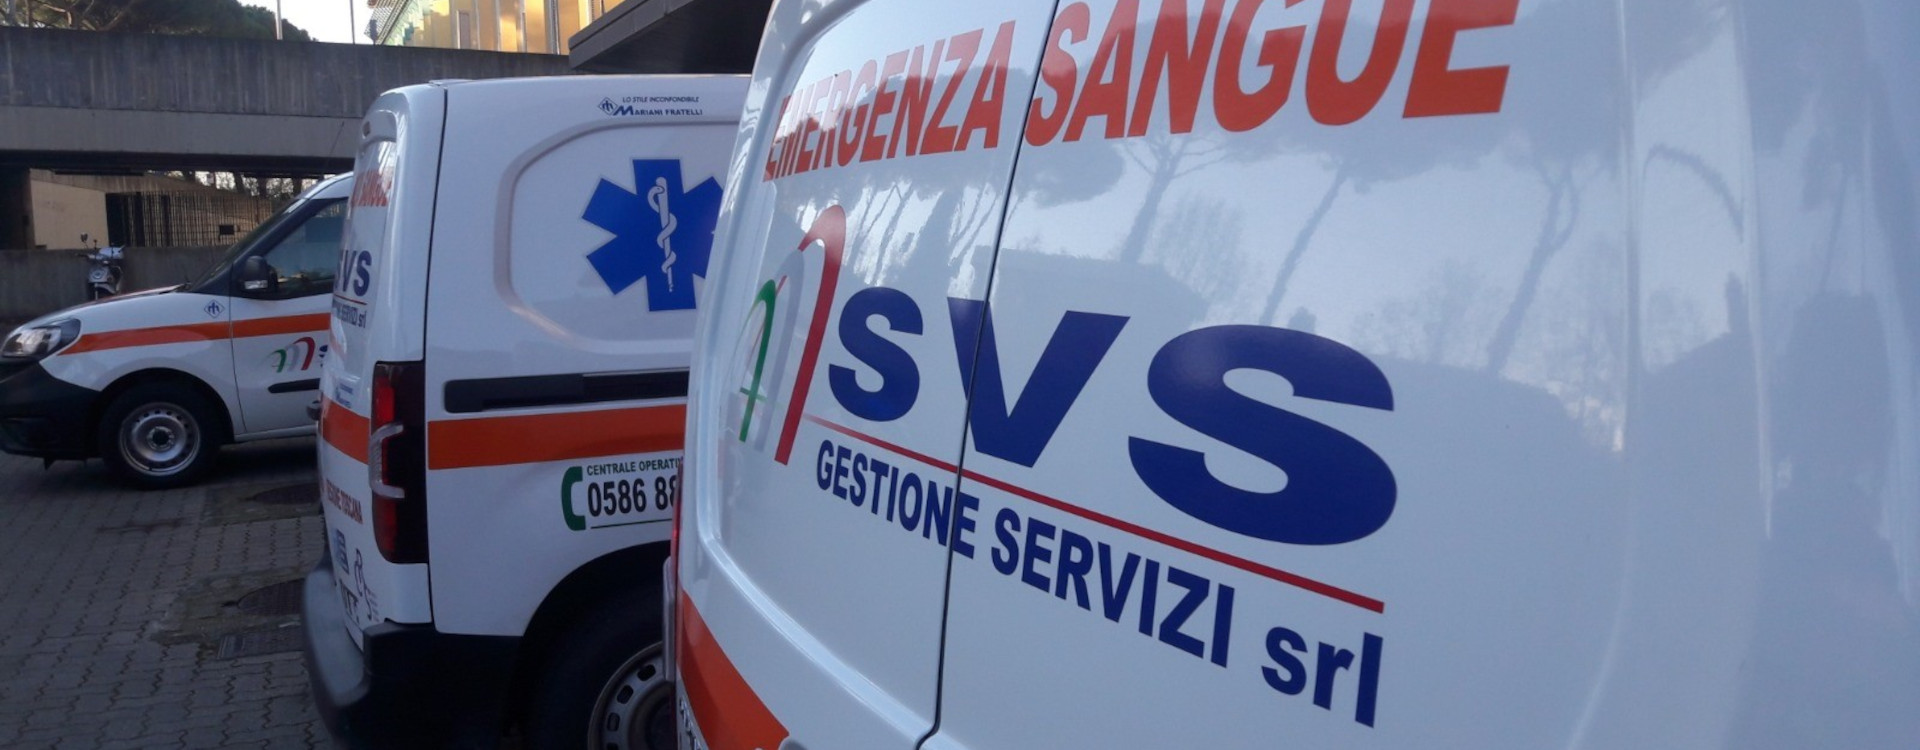 Trasporto sangue, organi ed emoderivati Regione Toscana SVS Gestione